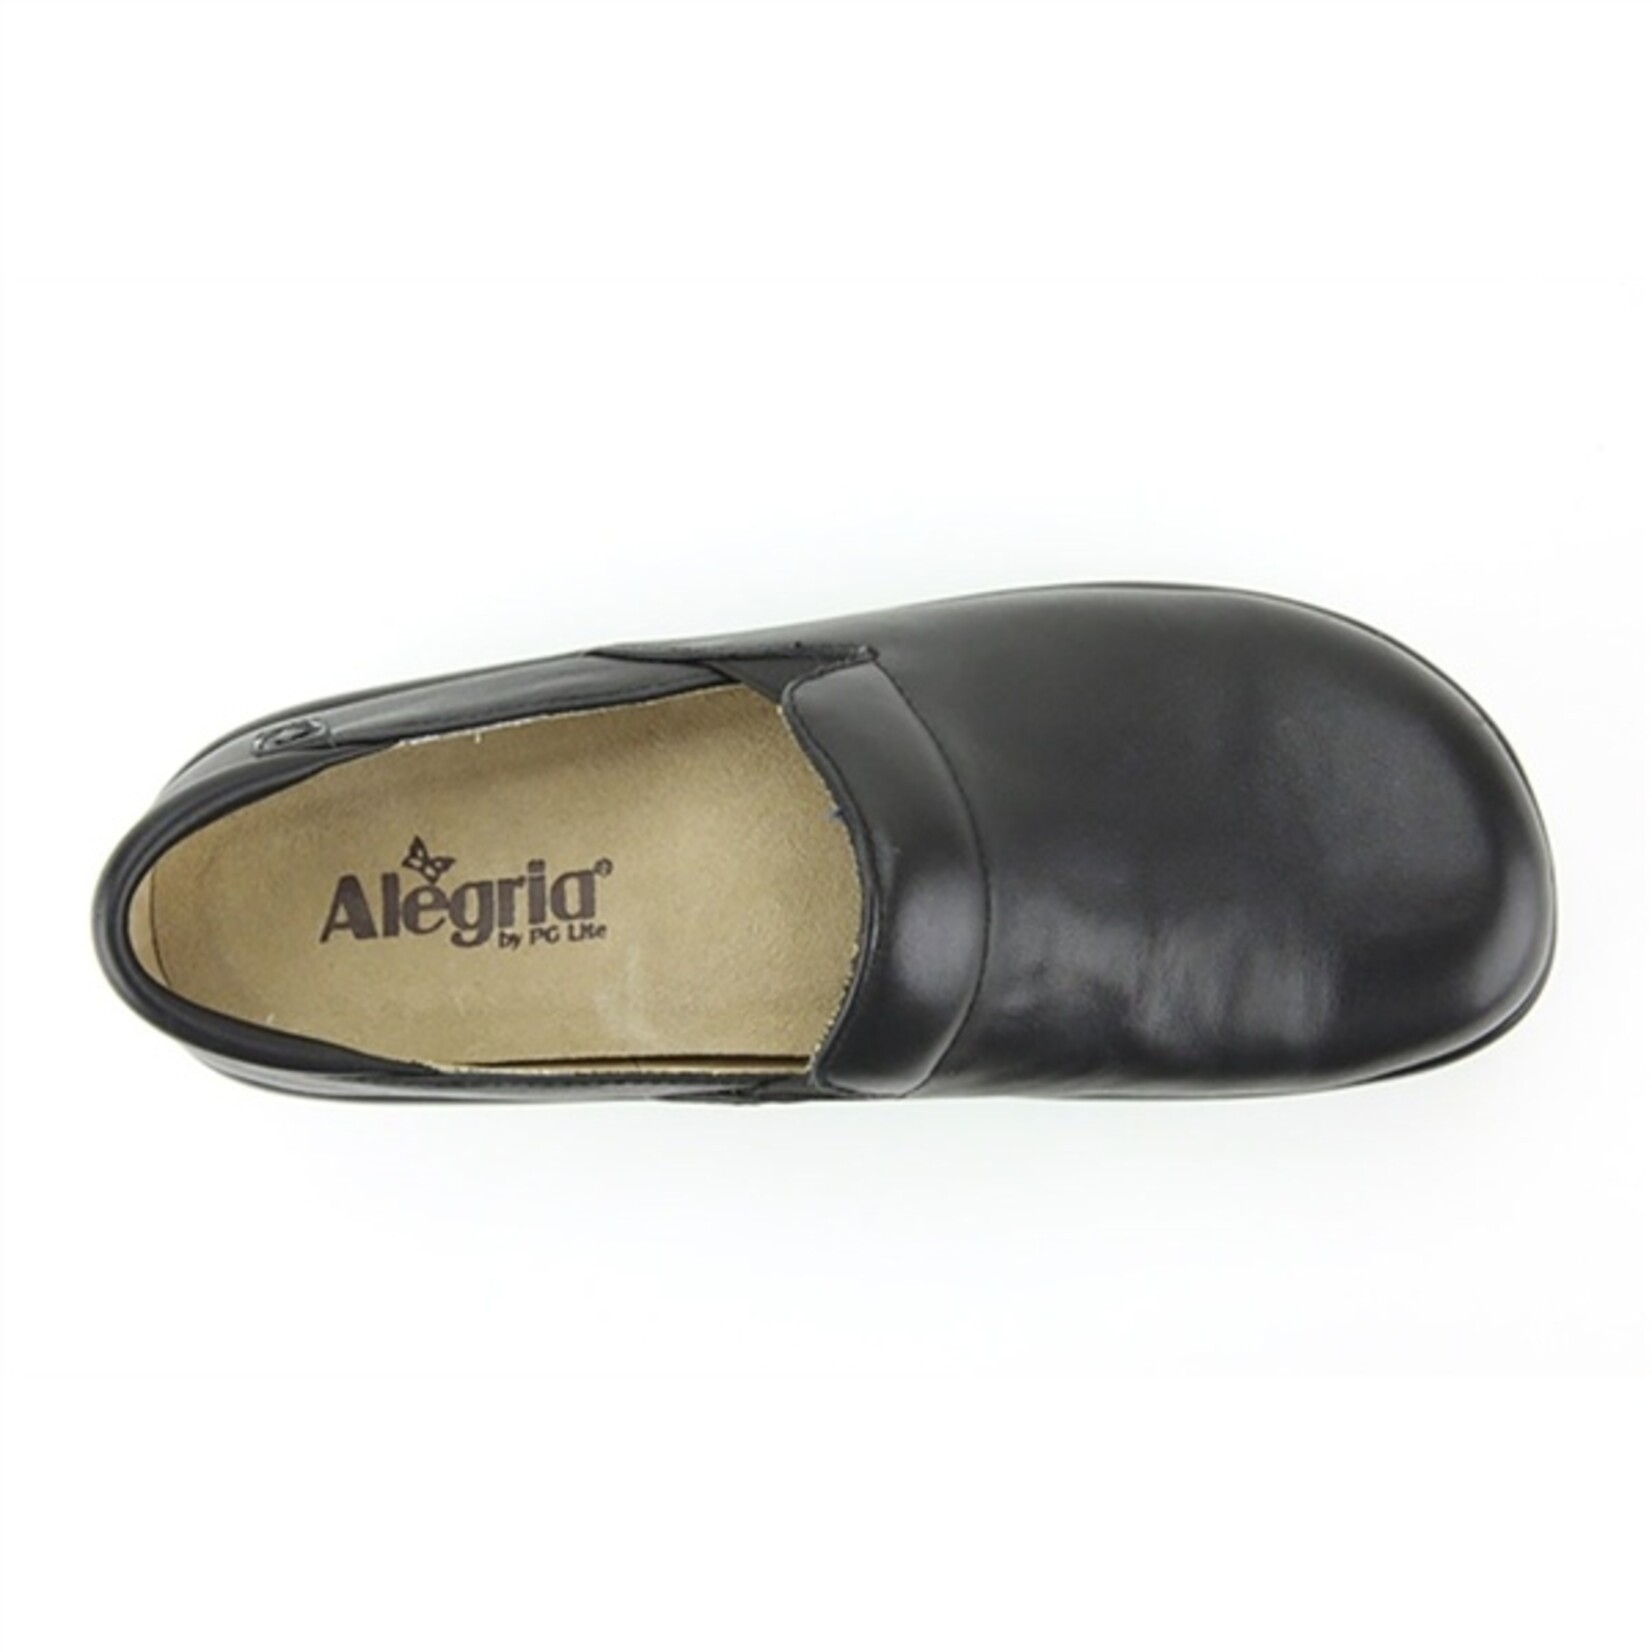 ALEGRIA Keli-601 - A Step Ahead Footwear